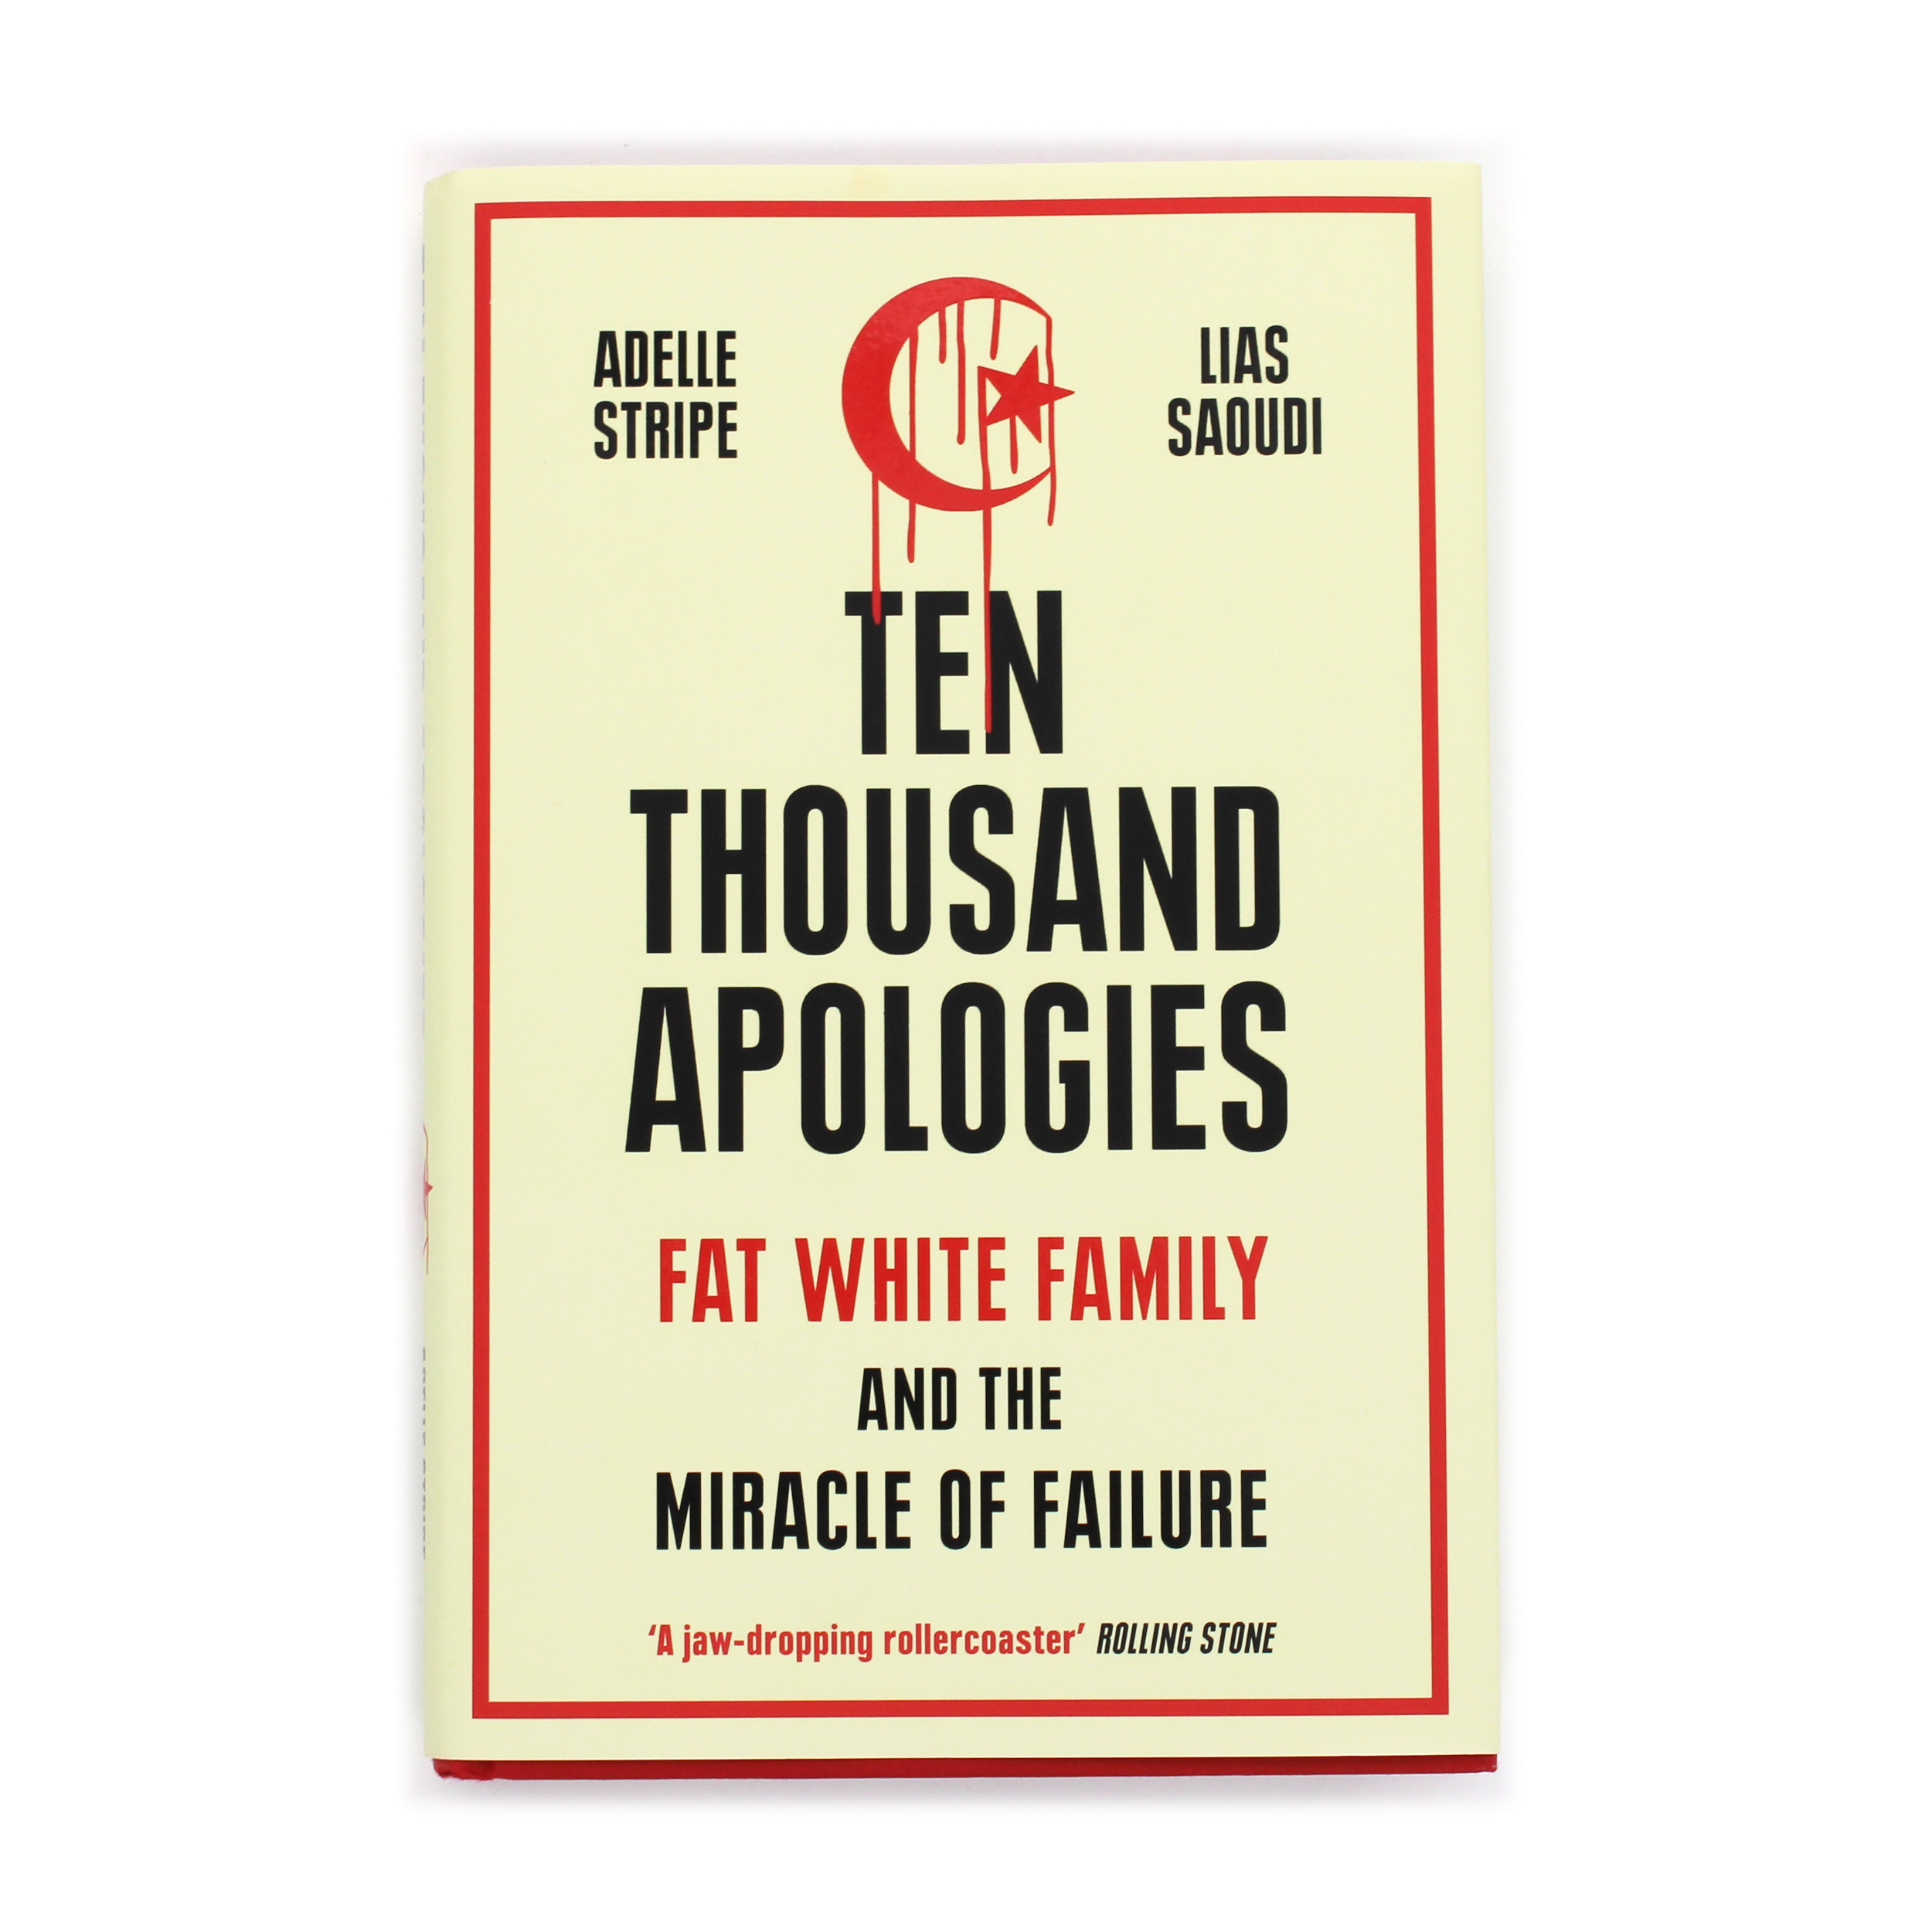 Album artwork for Ten Thousand Apologies: Fat White Family And The Miracle Of Failure by Adelle Stripe and Lias Saoudi